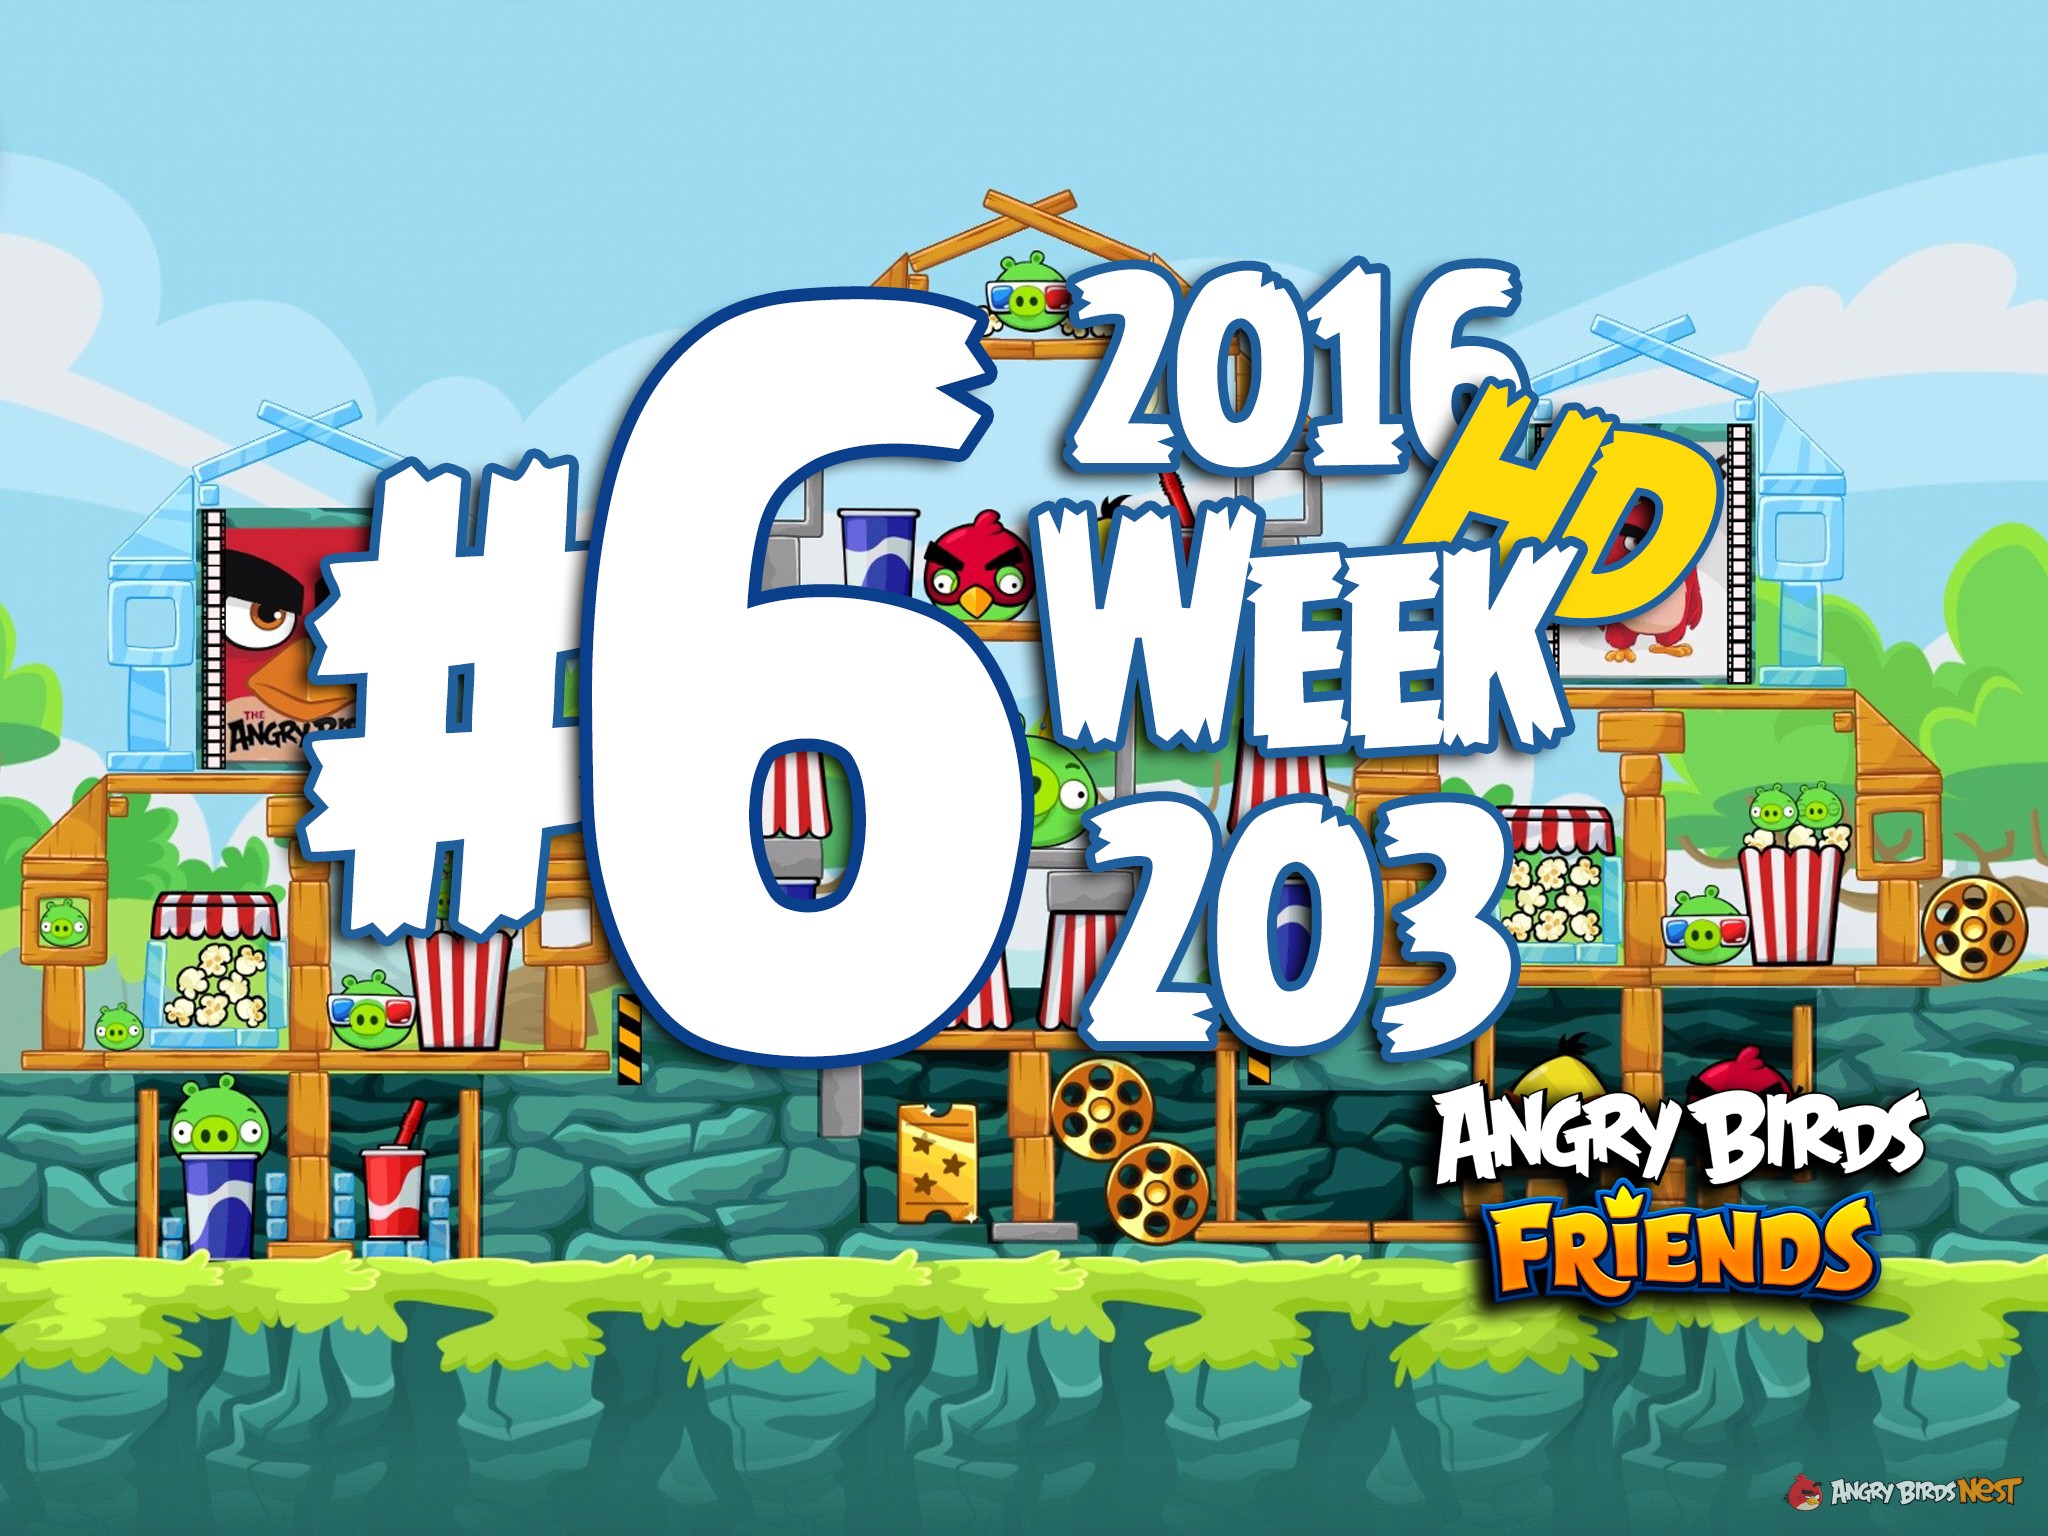 Angry Birds Friends Tournament Level 6 Week 203 Walkthrough | March 31st 2016